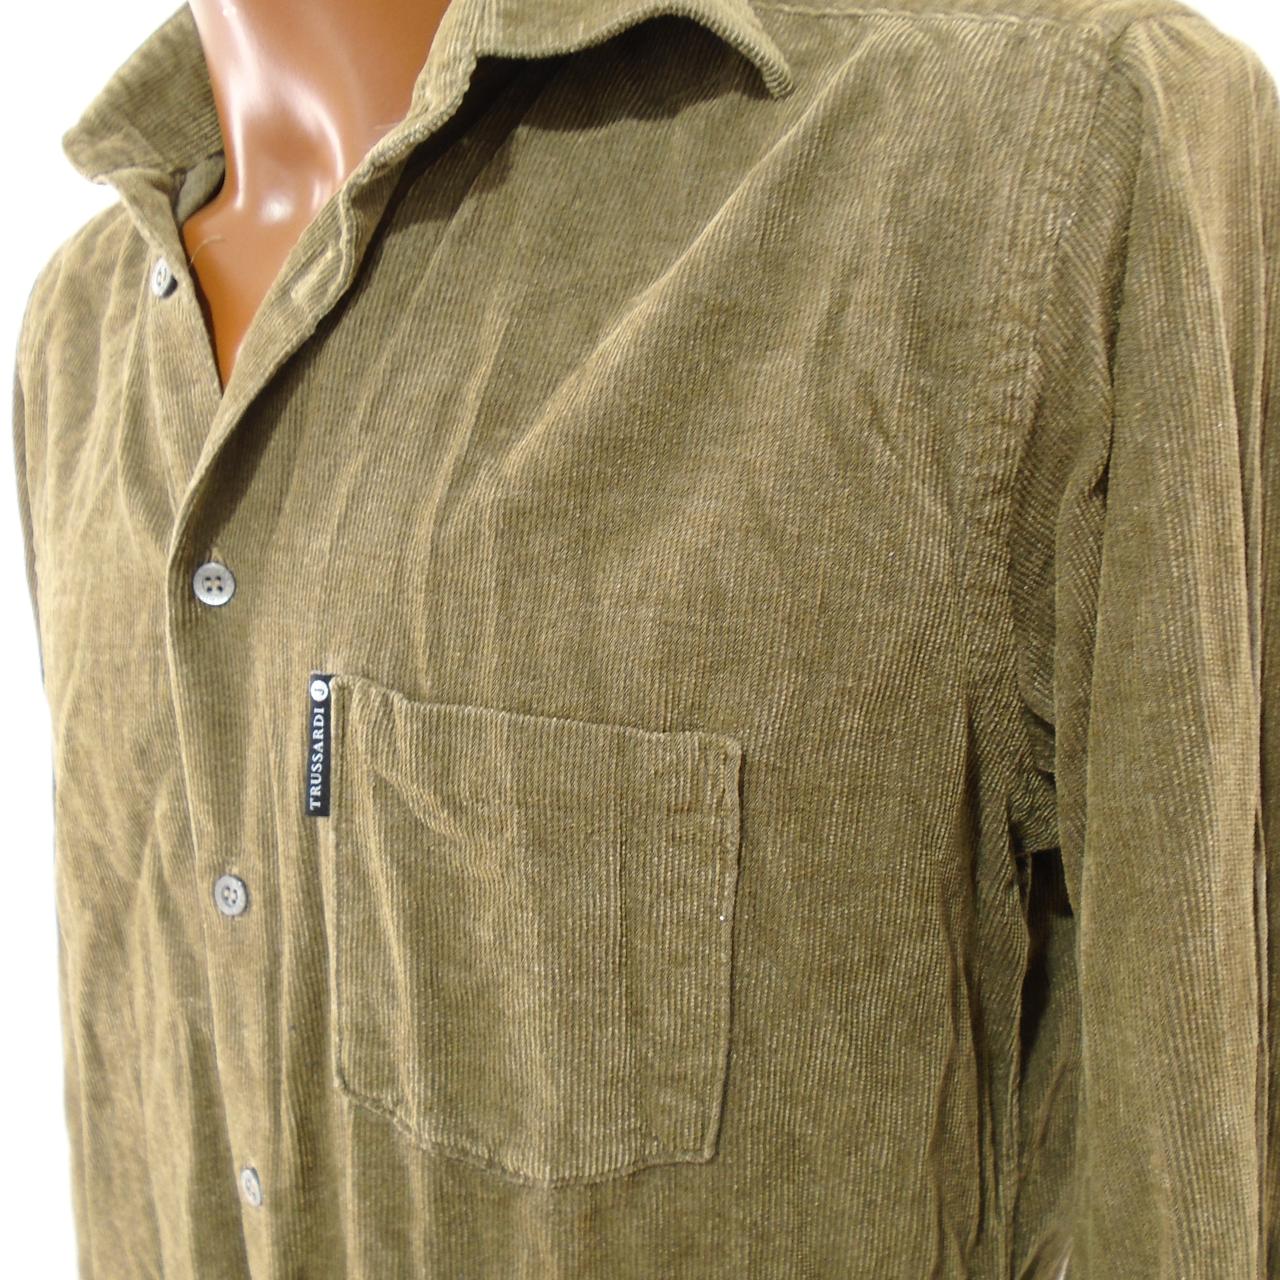 Men's Shirt Trussardi. Brown. XL. Used. Good